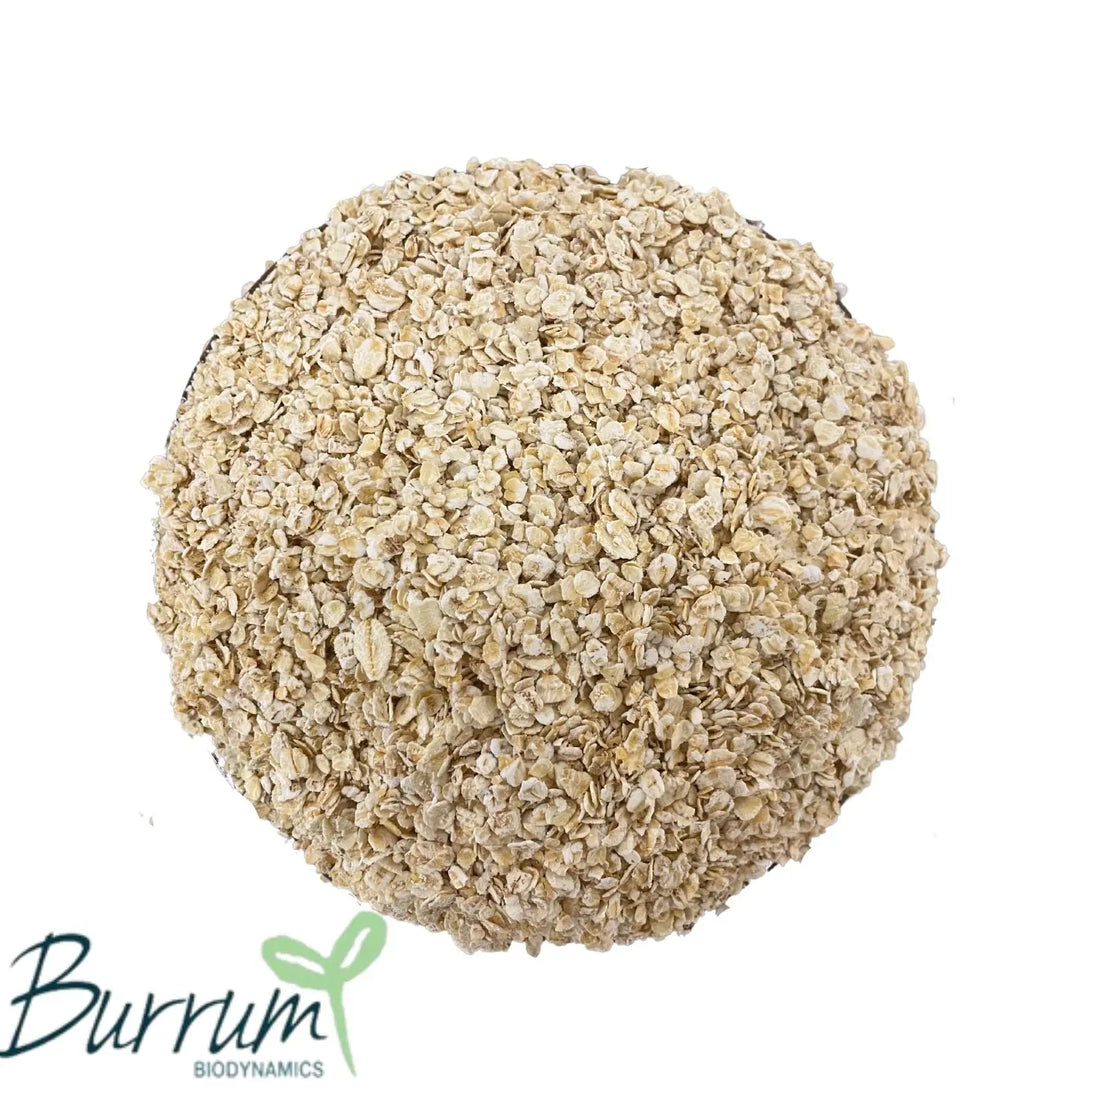 Rolled Oats Quick Biodynamic 800g-Pulse & Grain-Burrum Biodynamics-Sovereign Foods-Oats-Bulk-Organic-Australian Grown-